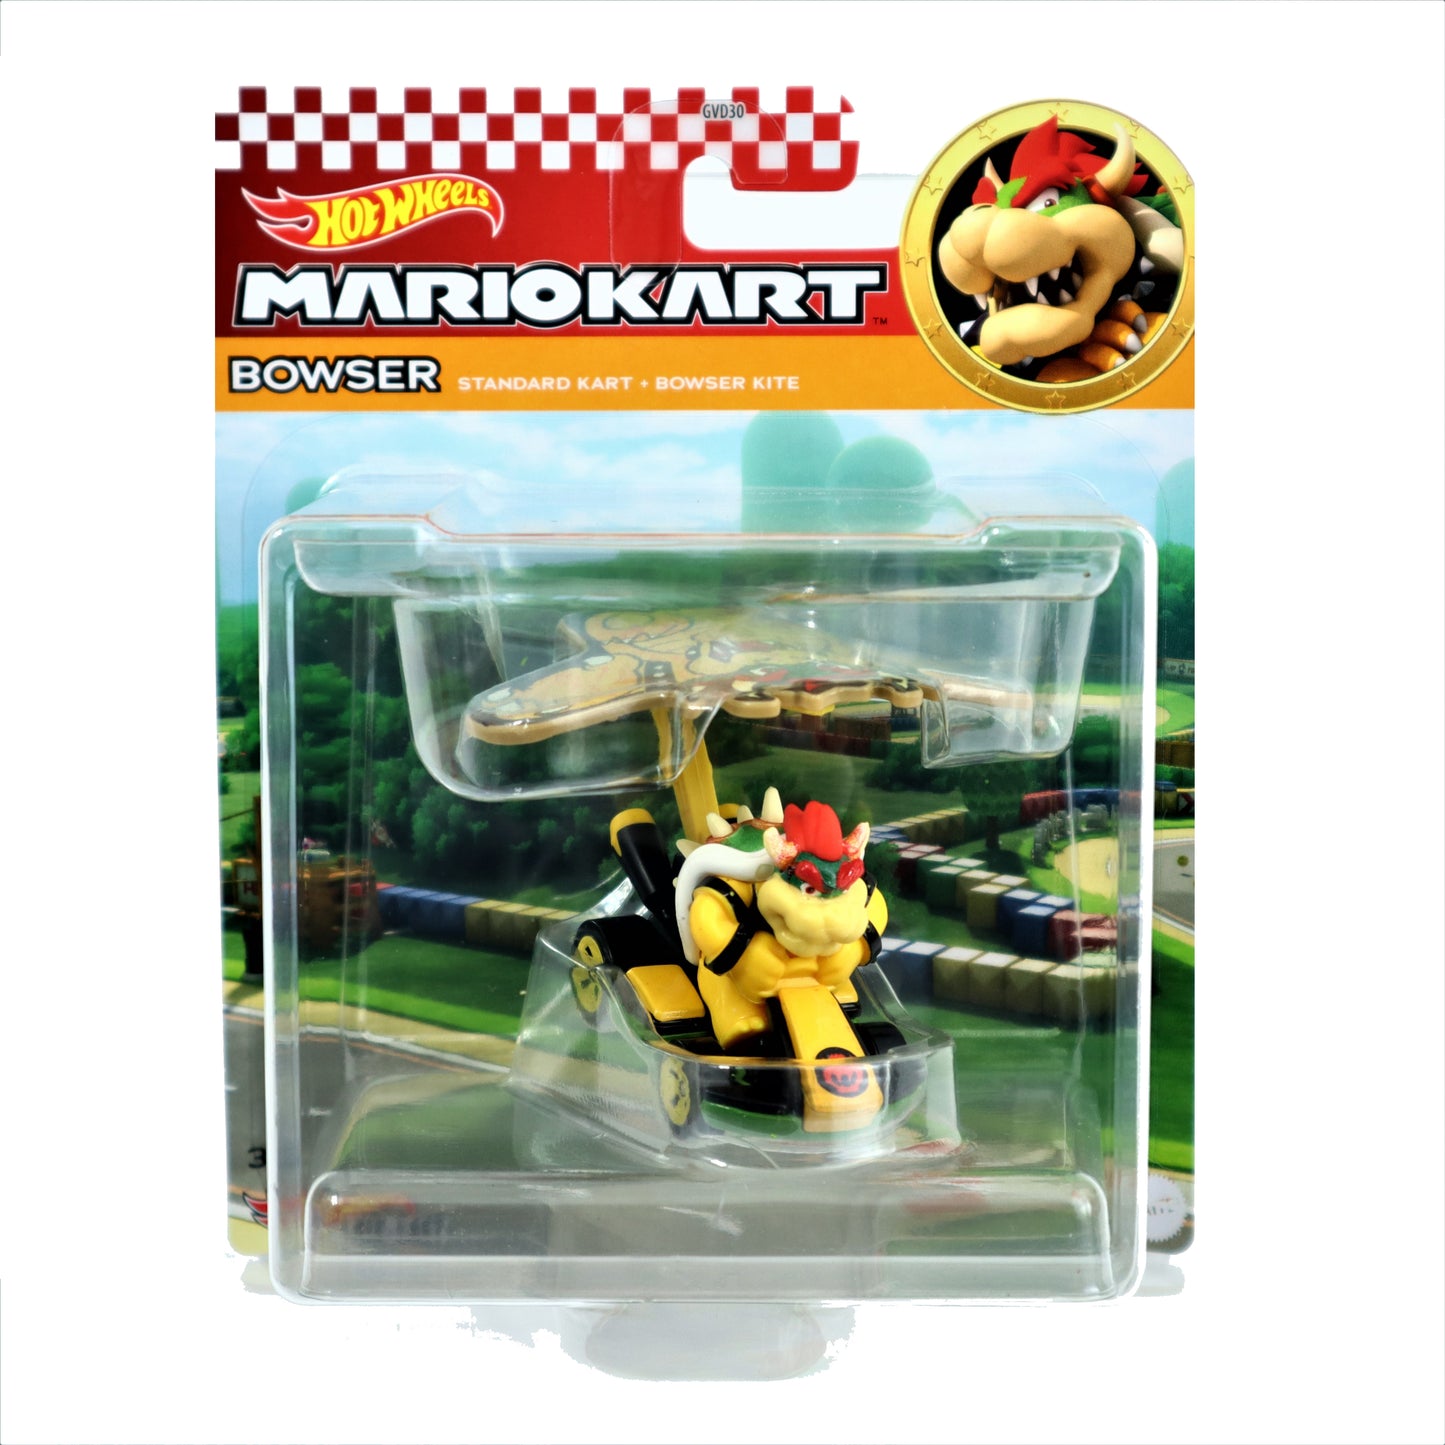 Hot Wheels Mario Kart Cars: Bowser Nintendo Glider Edition: Green & Yellow: 1:64 Scale